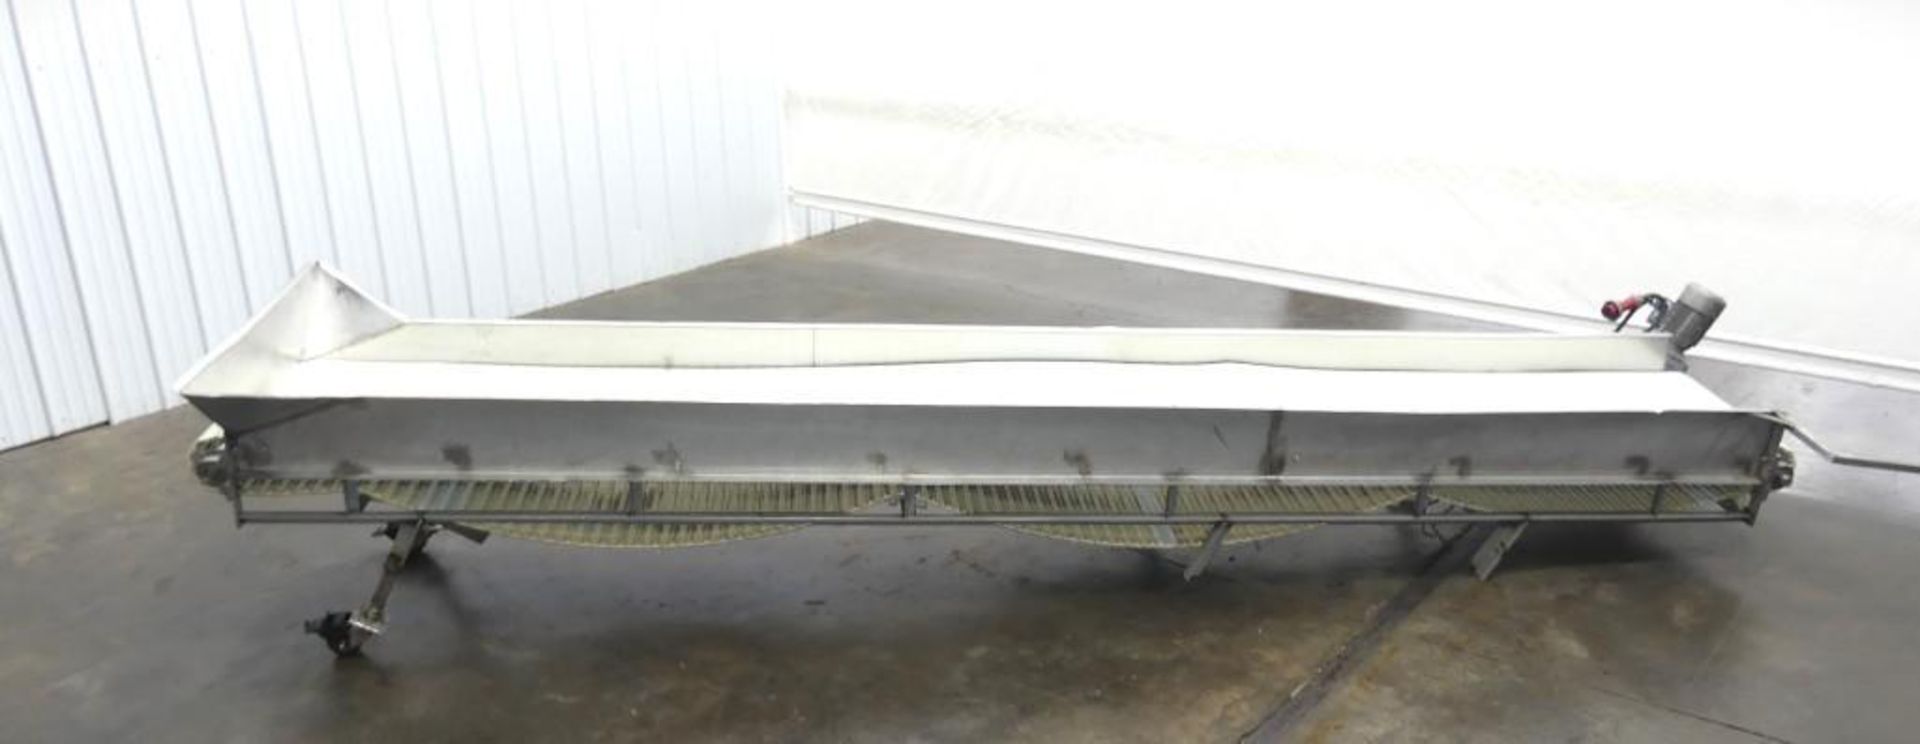 Plastic TableTop Conveyor 16 Foot Long x 24 Inch W